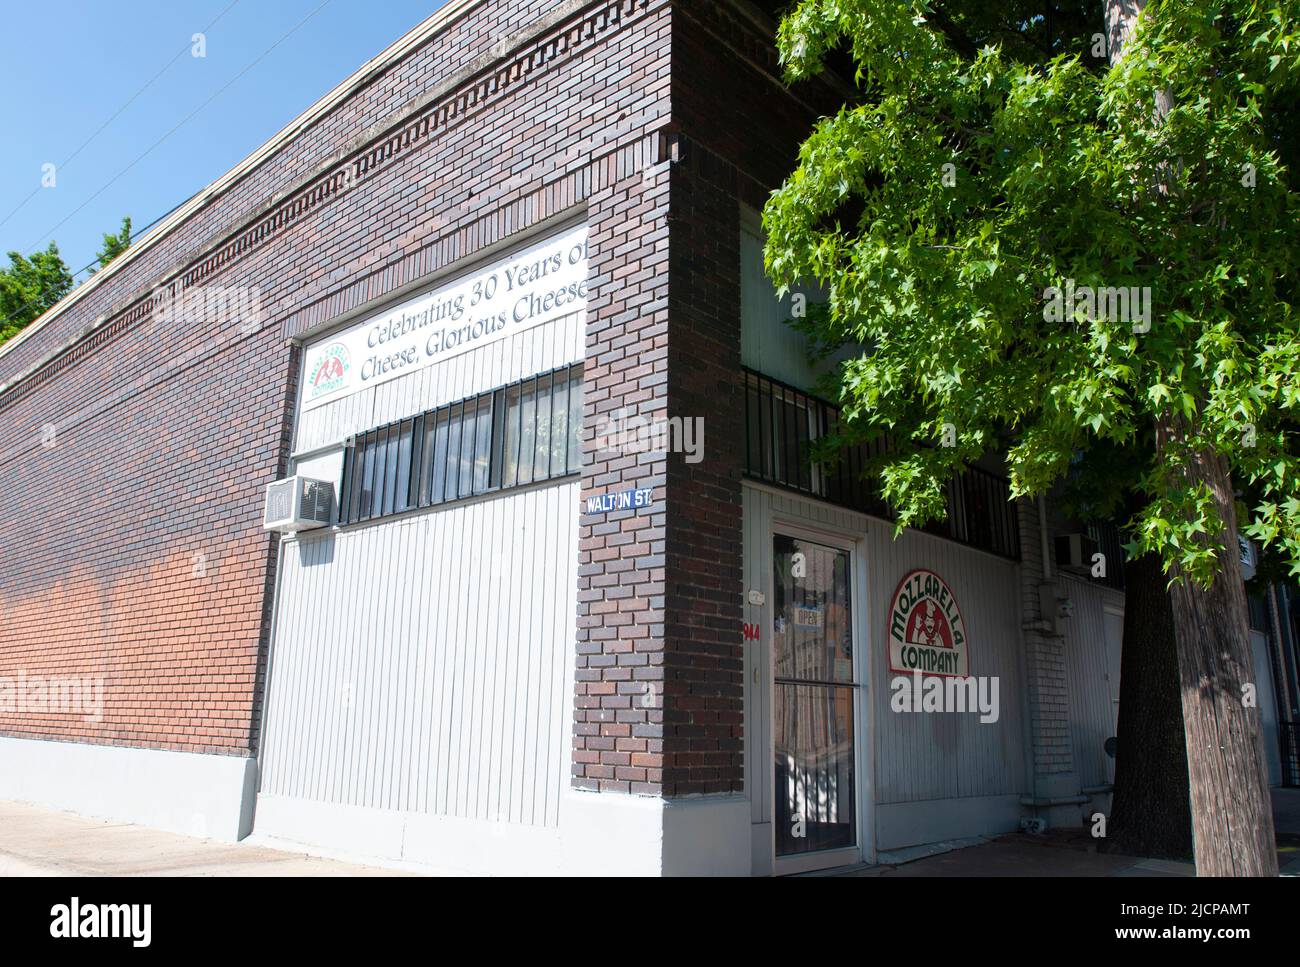 Deep Ellum Area of Dallas, Texas: The Mozzarella Company at the corner of Walton and Elm Streets Stock Photo